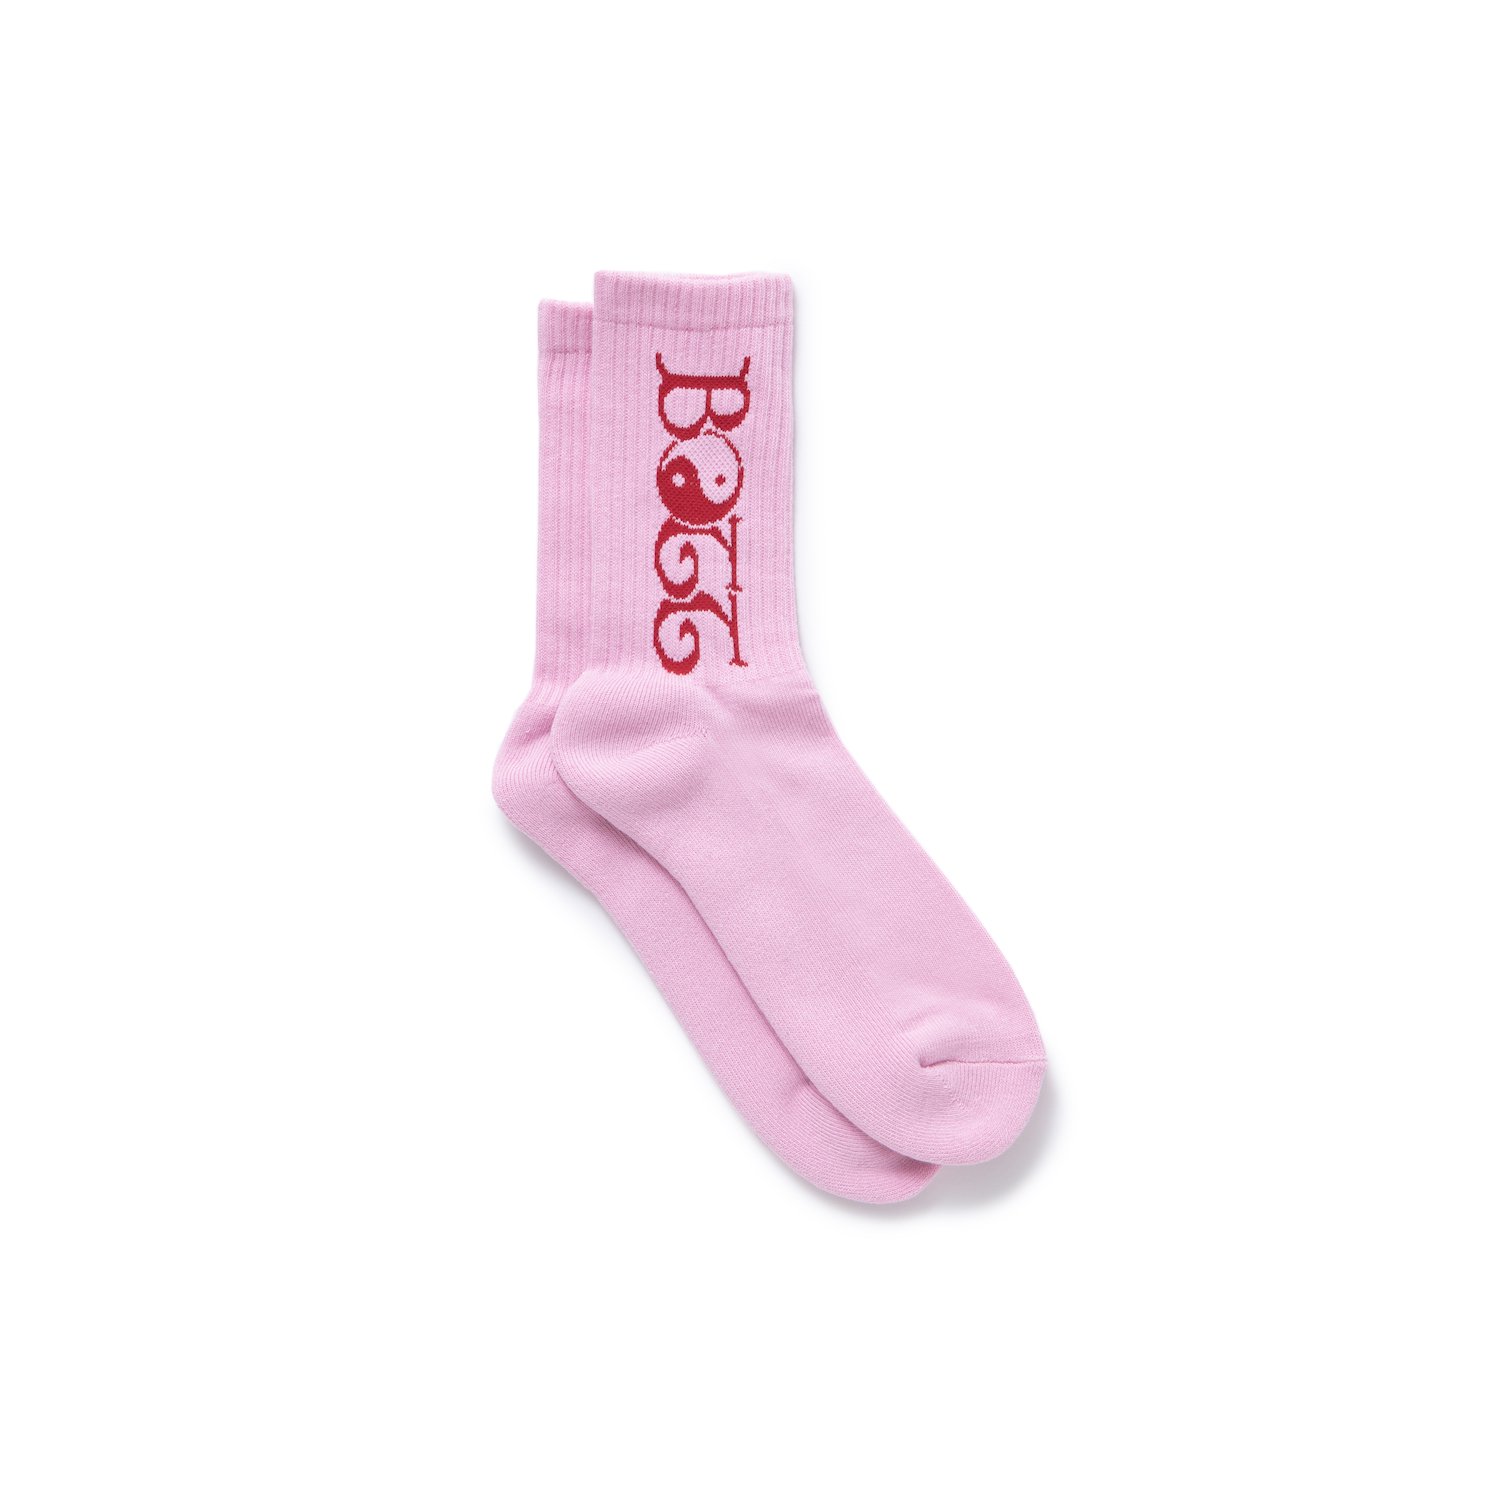 BoTT<br>2Y Socks<br>